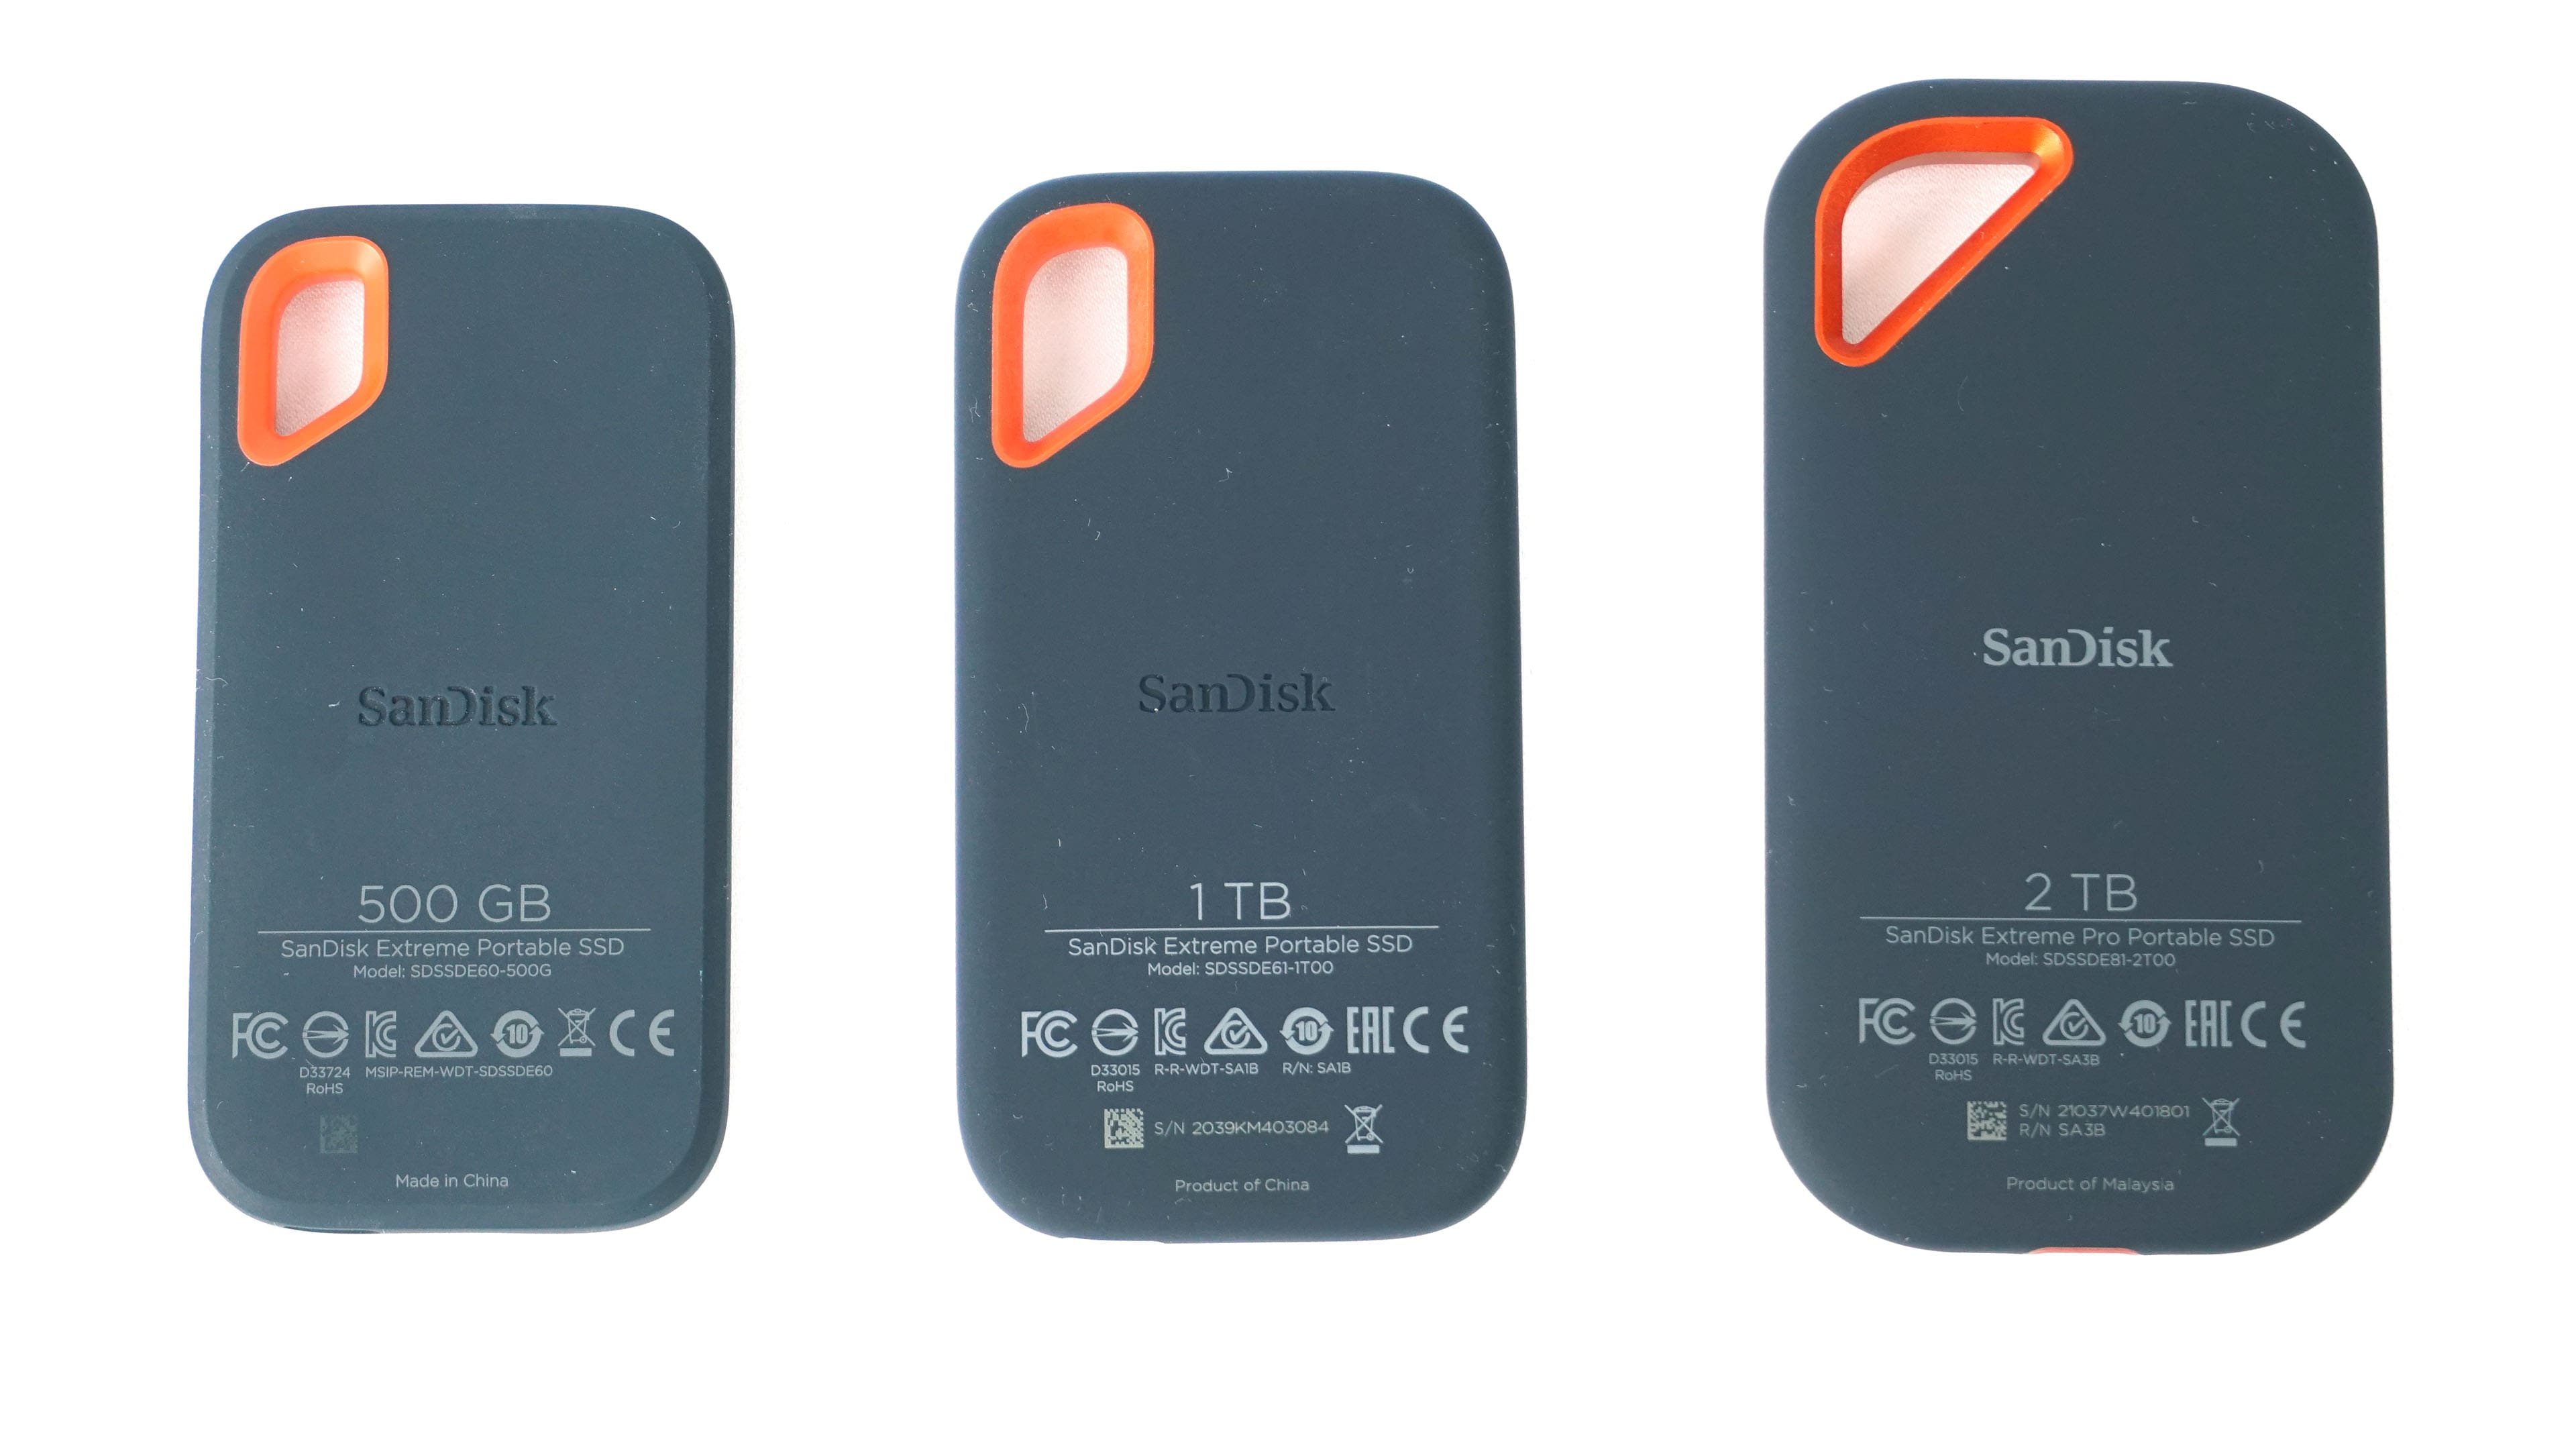 SanDisk Extreme Portable SSD V2: higher performance, new body